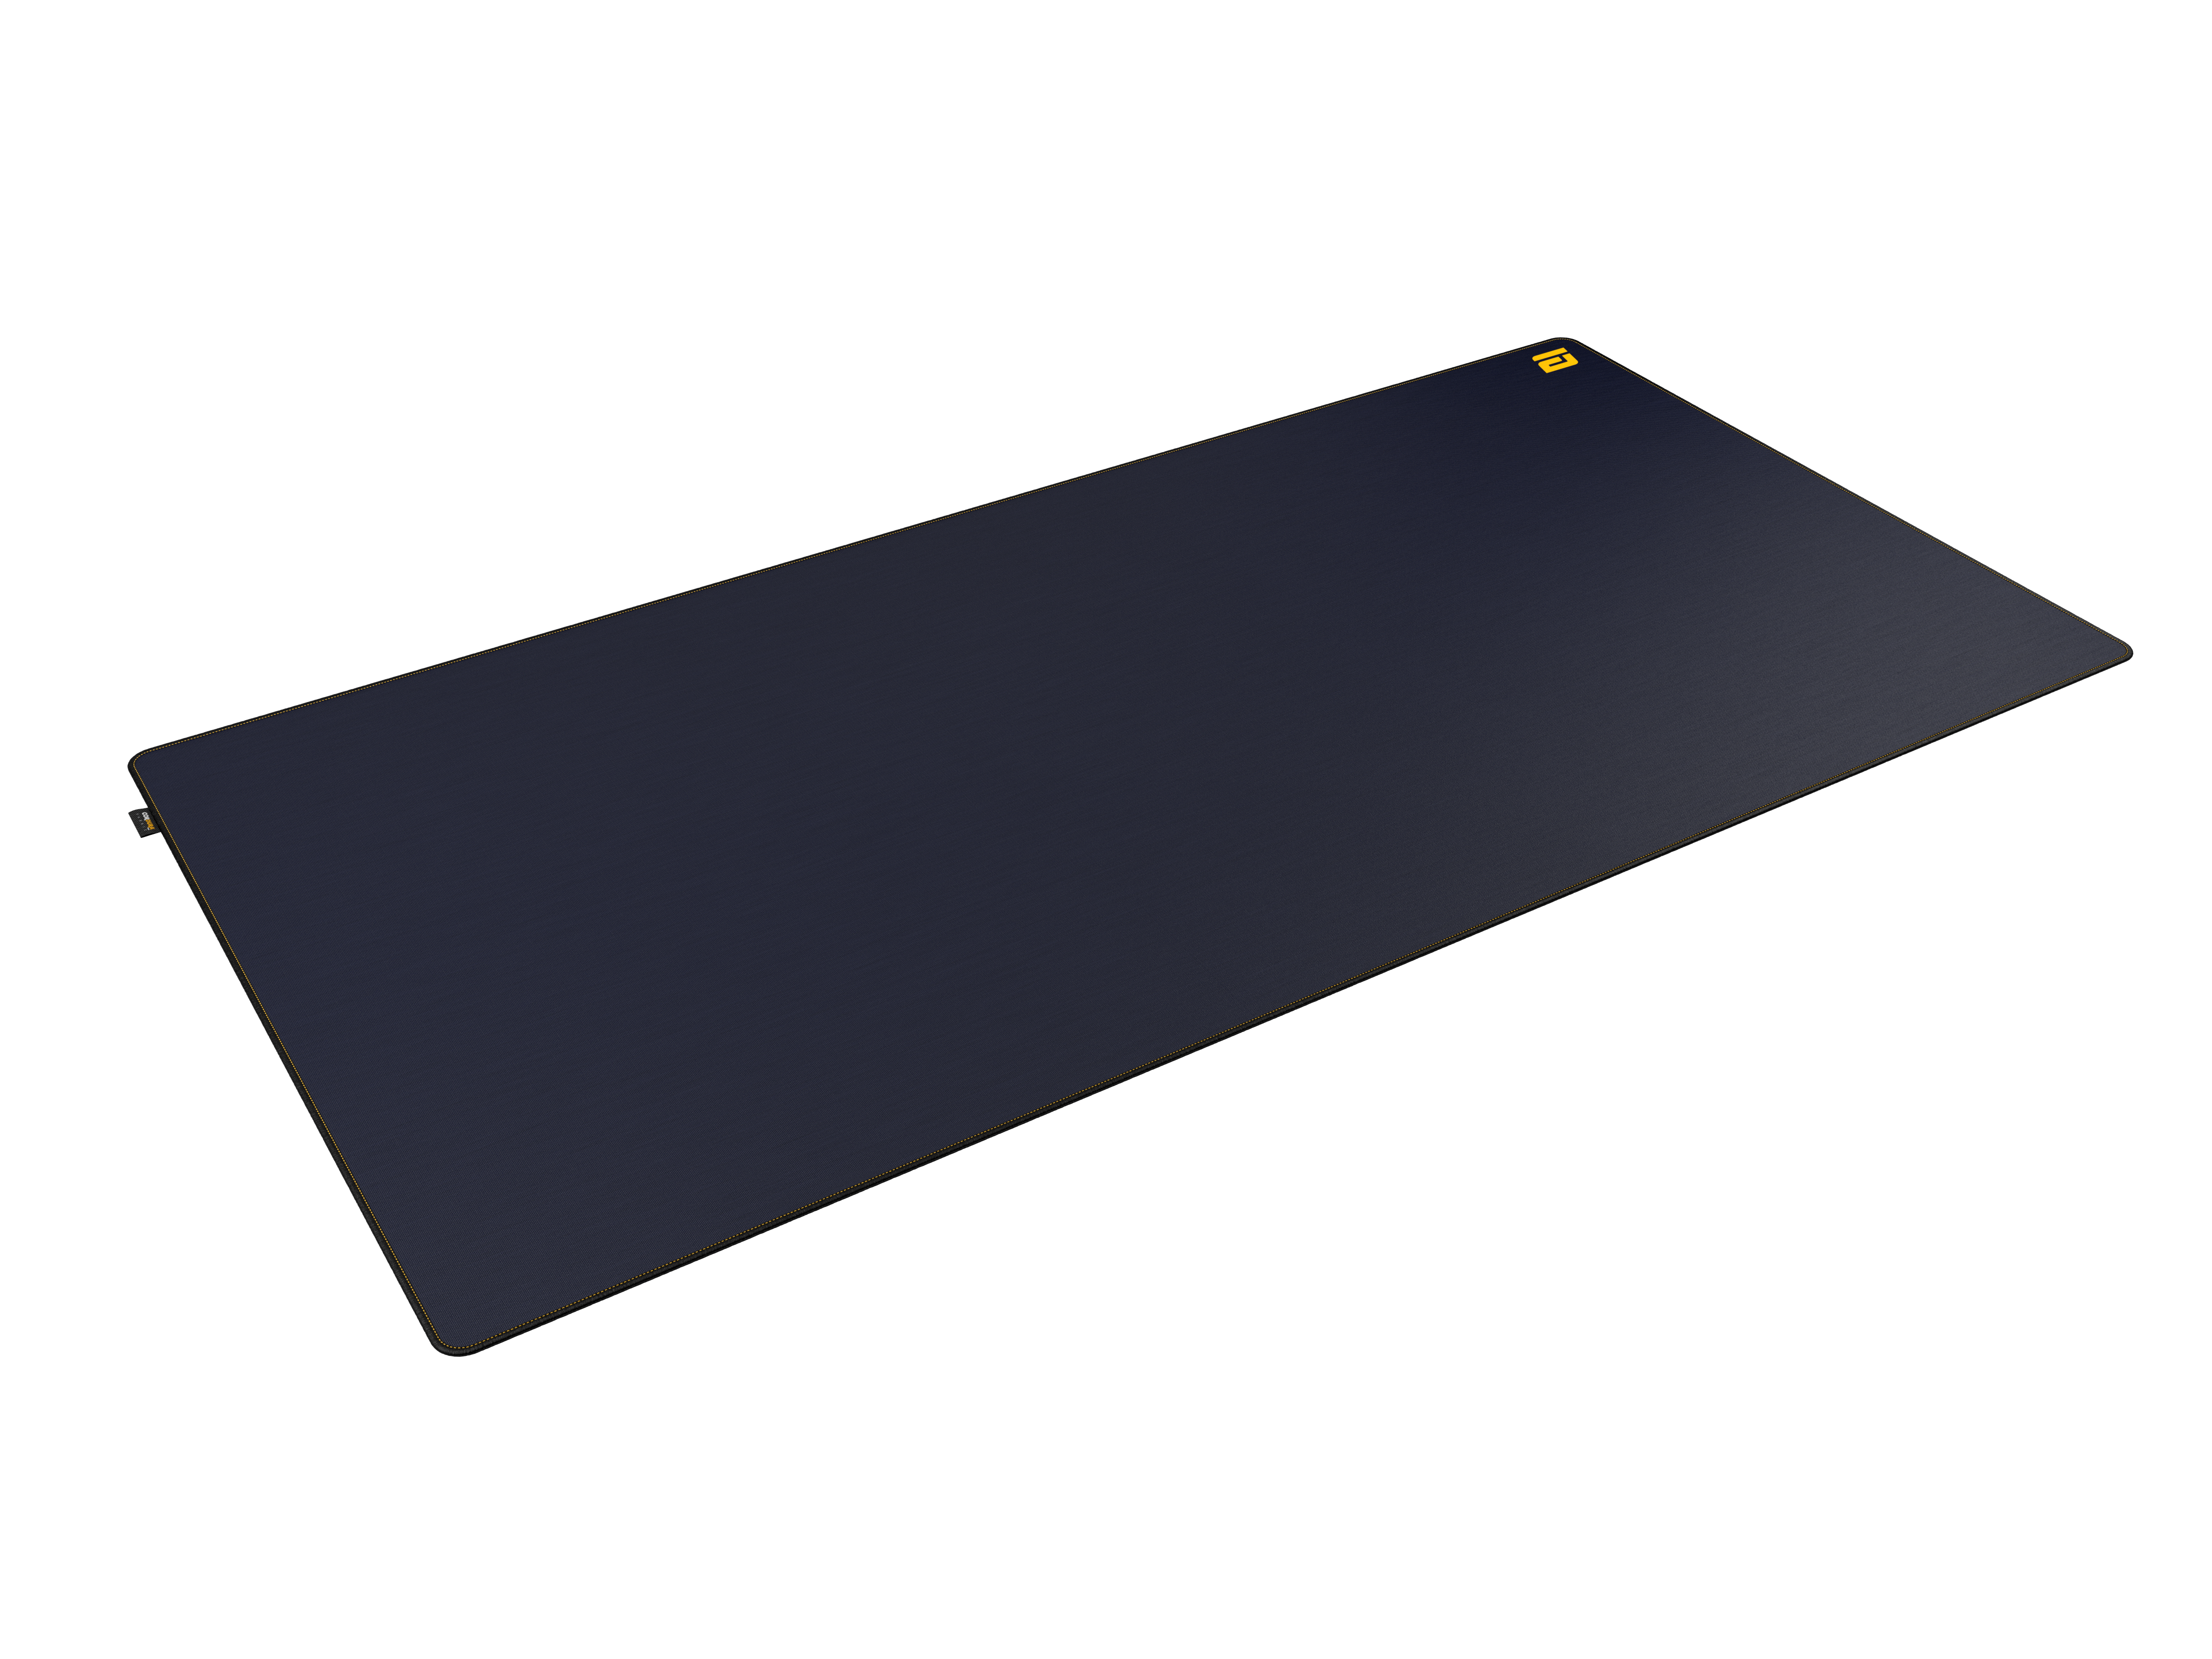  - MPC890 CORDURA® Gaming Mousepad - dark blue